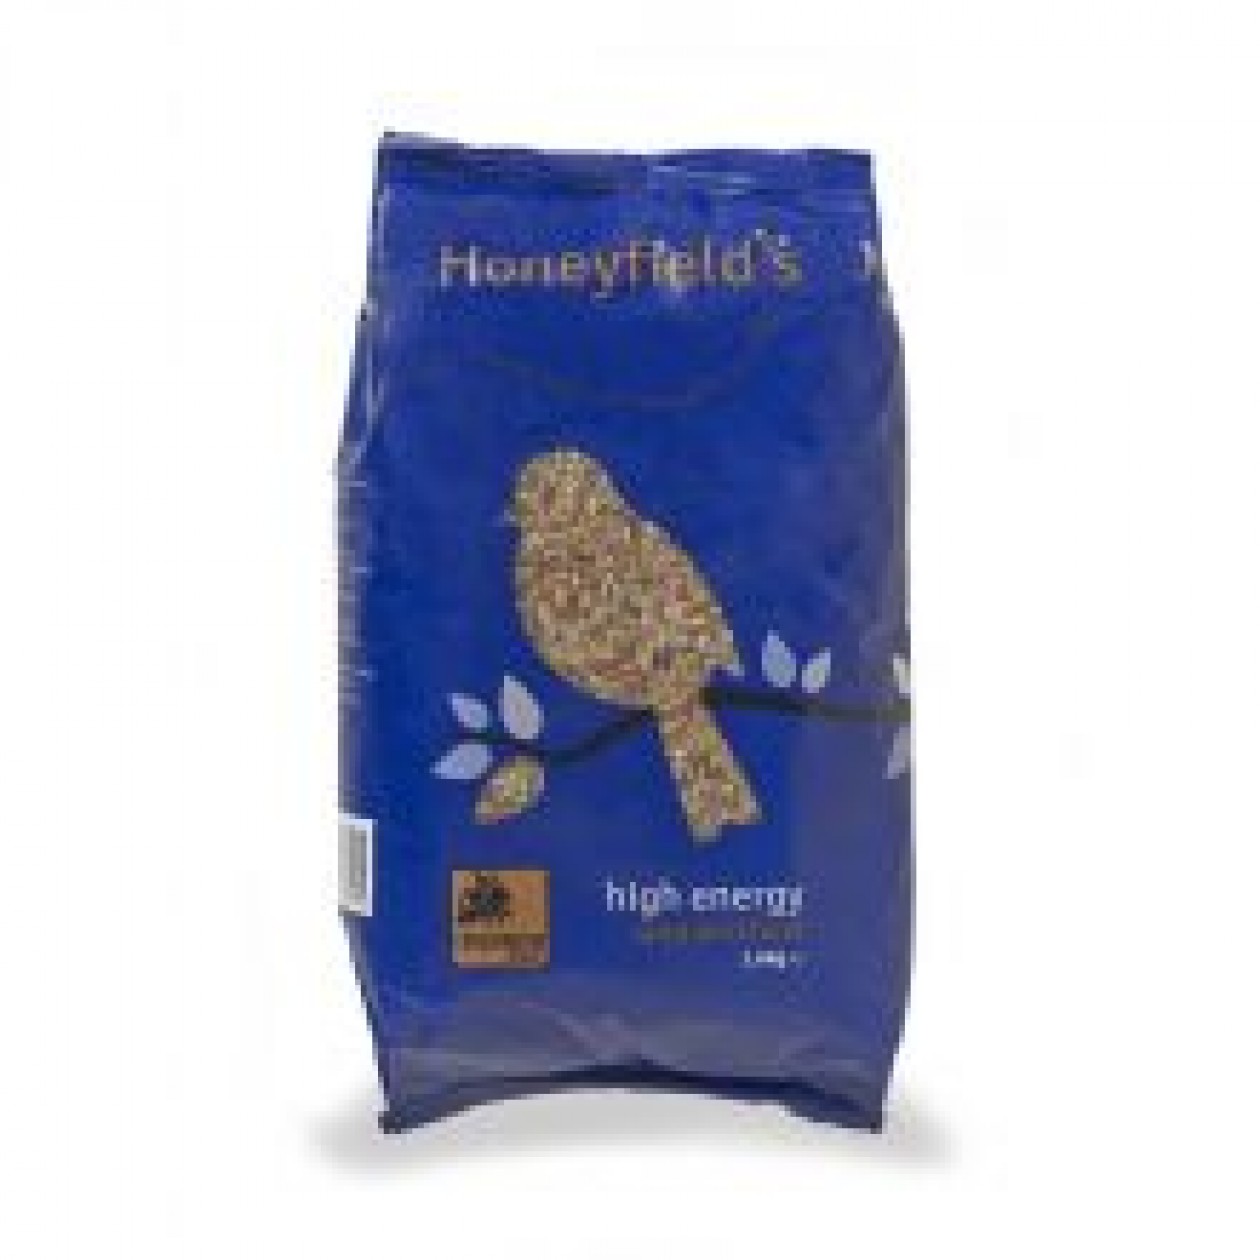 Honeyfields High Energy Mix, 1.6kg